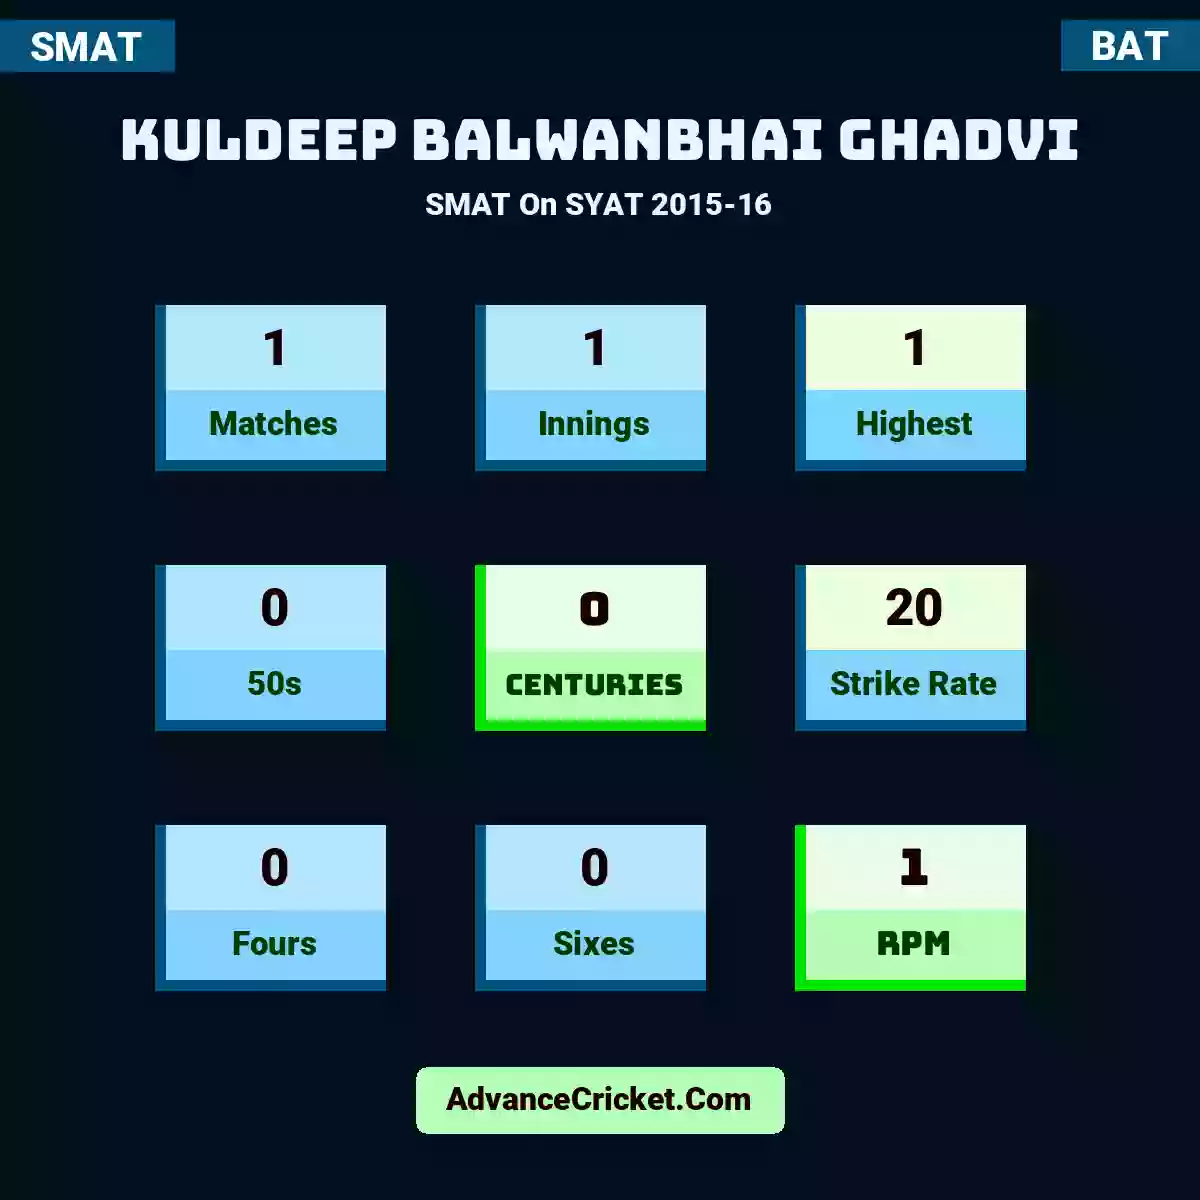 Kuldeep Balwanbhai Ghadvi SMAT  On SYAT 2015-16, Kuldeep Balwanbhai Ghadvi played 1 matches, scored 1 runs as highest, 0 half-centuries, and 0 centuries, with a strike rate of 20. K.Ghadvi hit 0 fours and 0 sixes, with an RPM of 1.